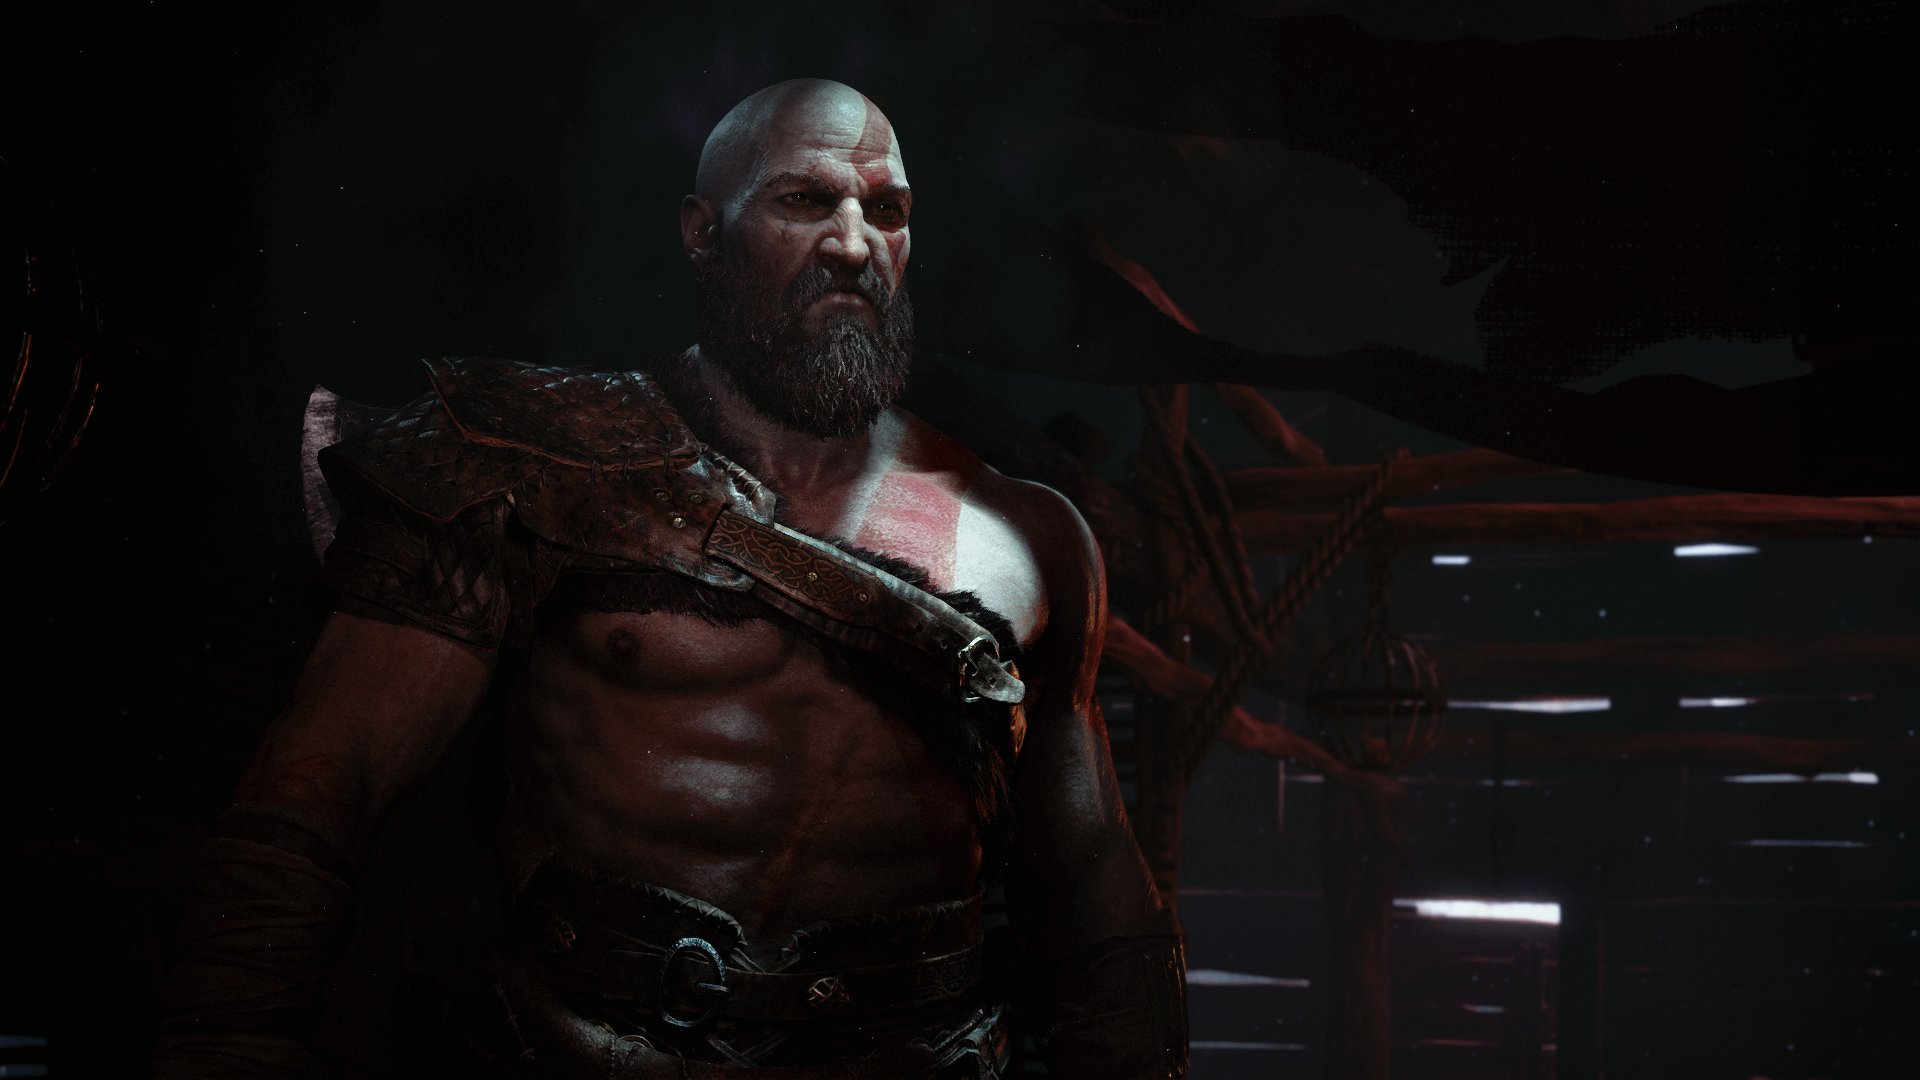 Kratos Wallpaper 4K, Fortnite, God of War, Skin